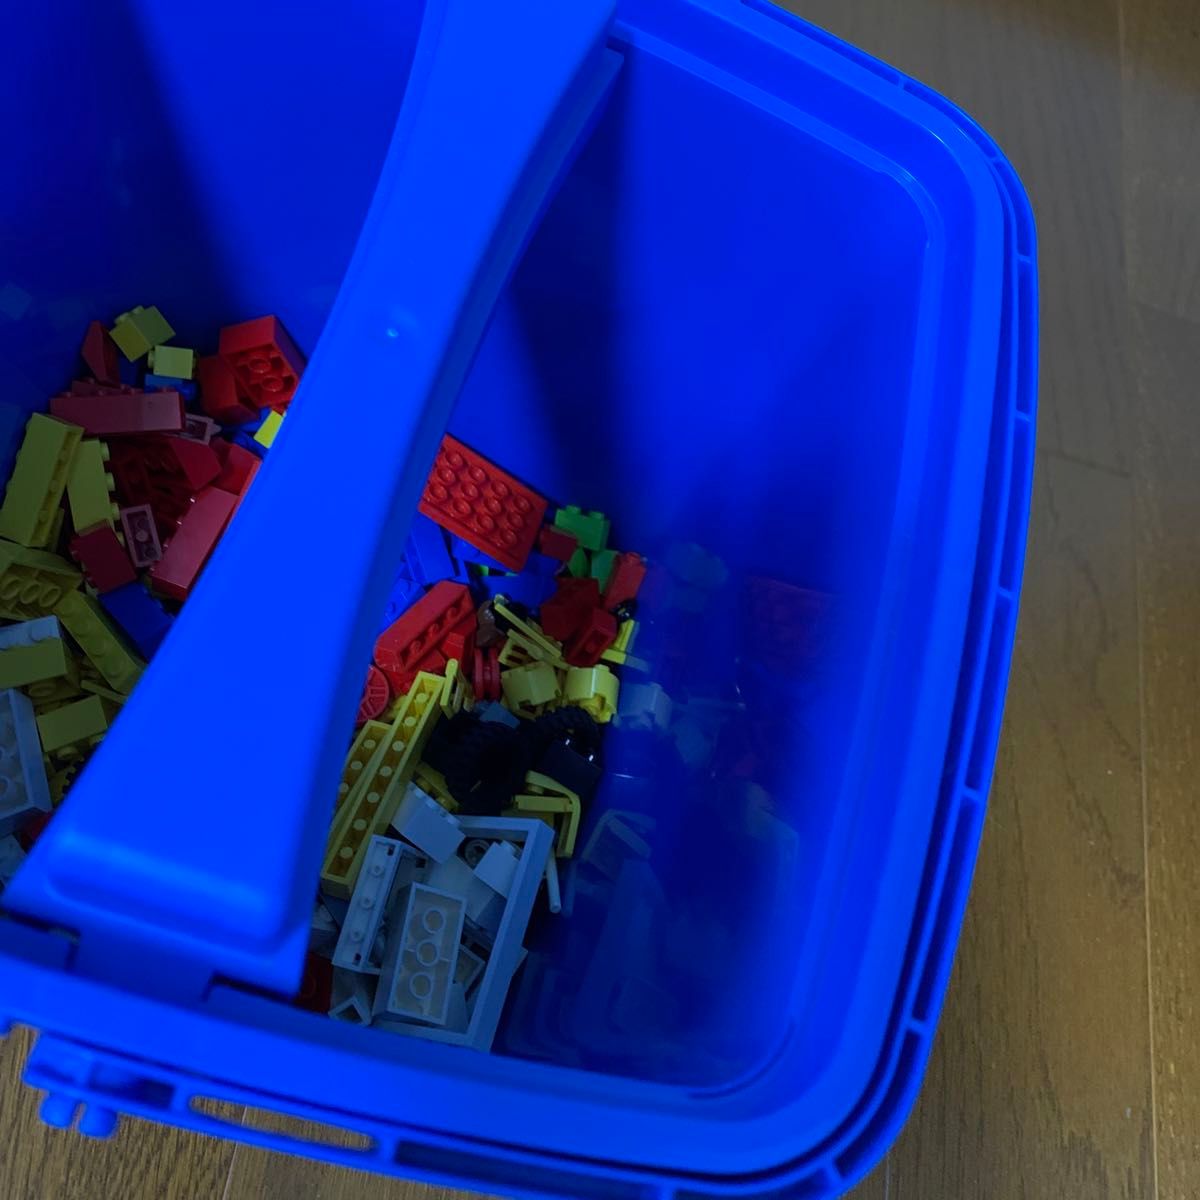 LEGO レゴ 基本セット 青いバケツ ブロック おもちゃ レゴブロック